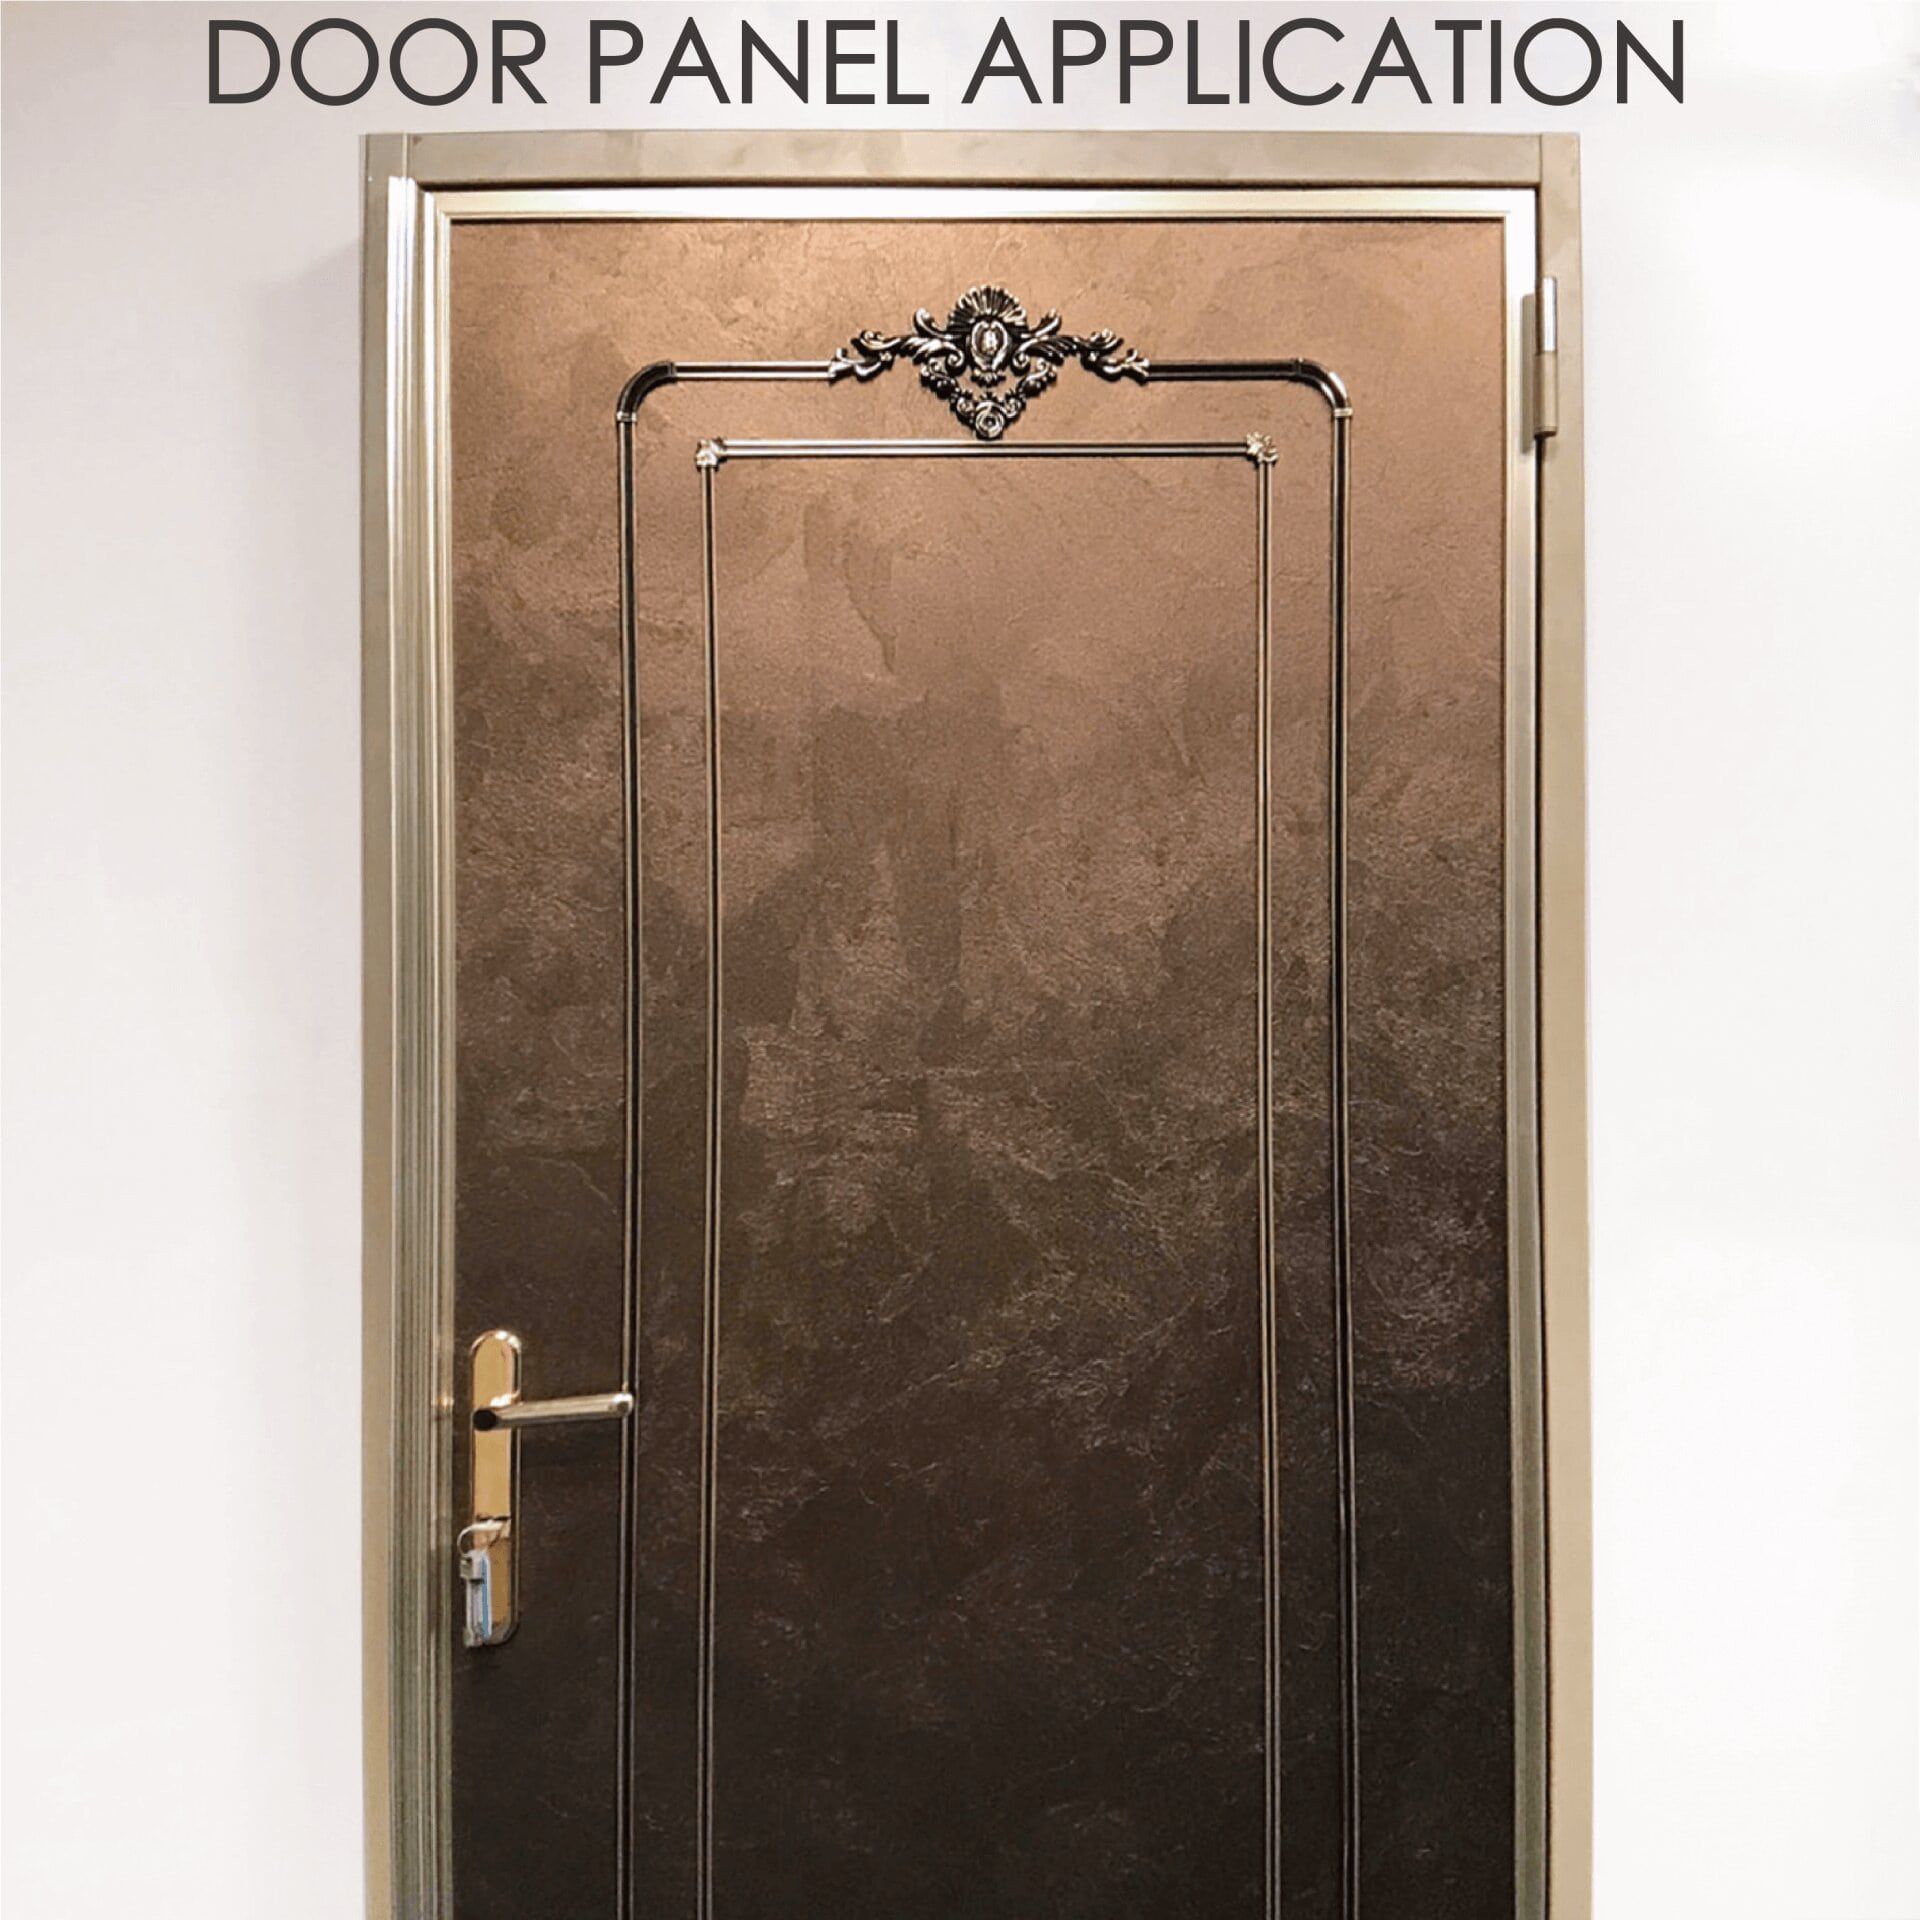 Mengganti pintu kayu dengan logam laminasi dapat meningkatkan keamanan dan daya tahan